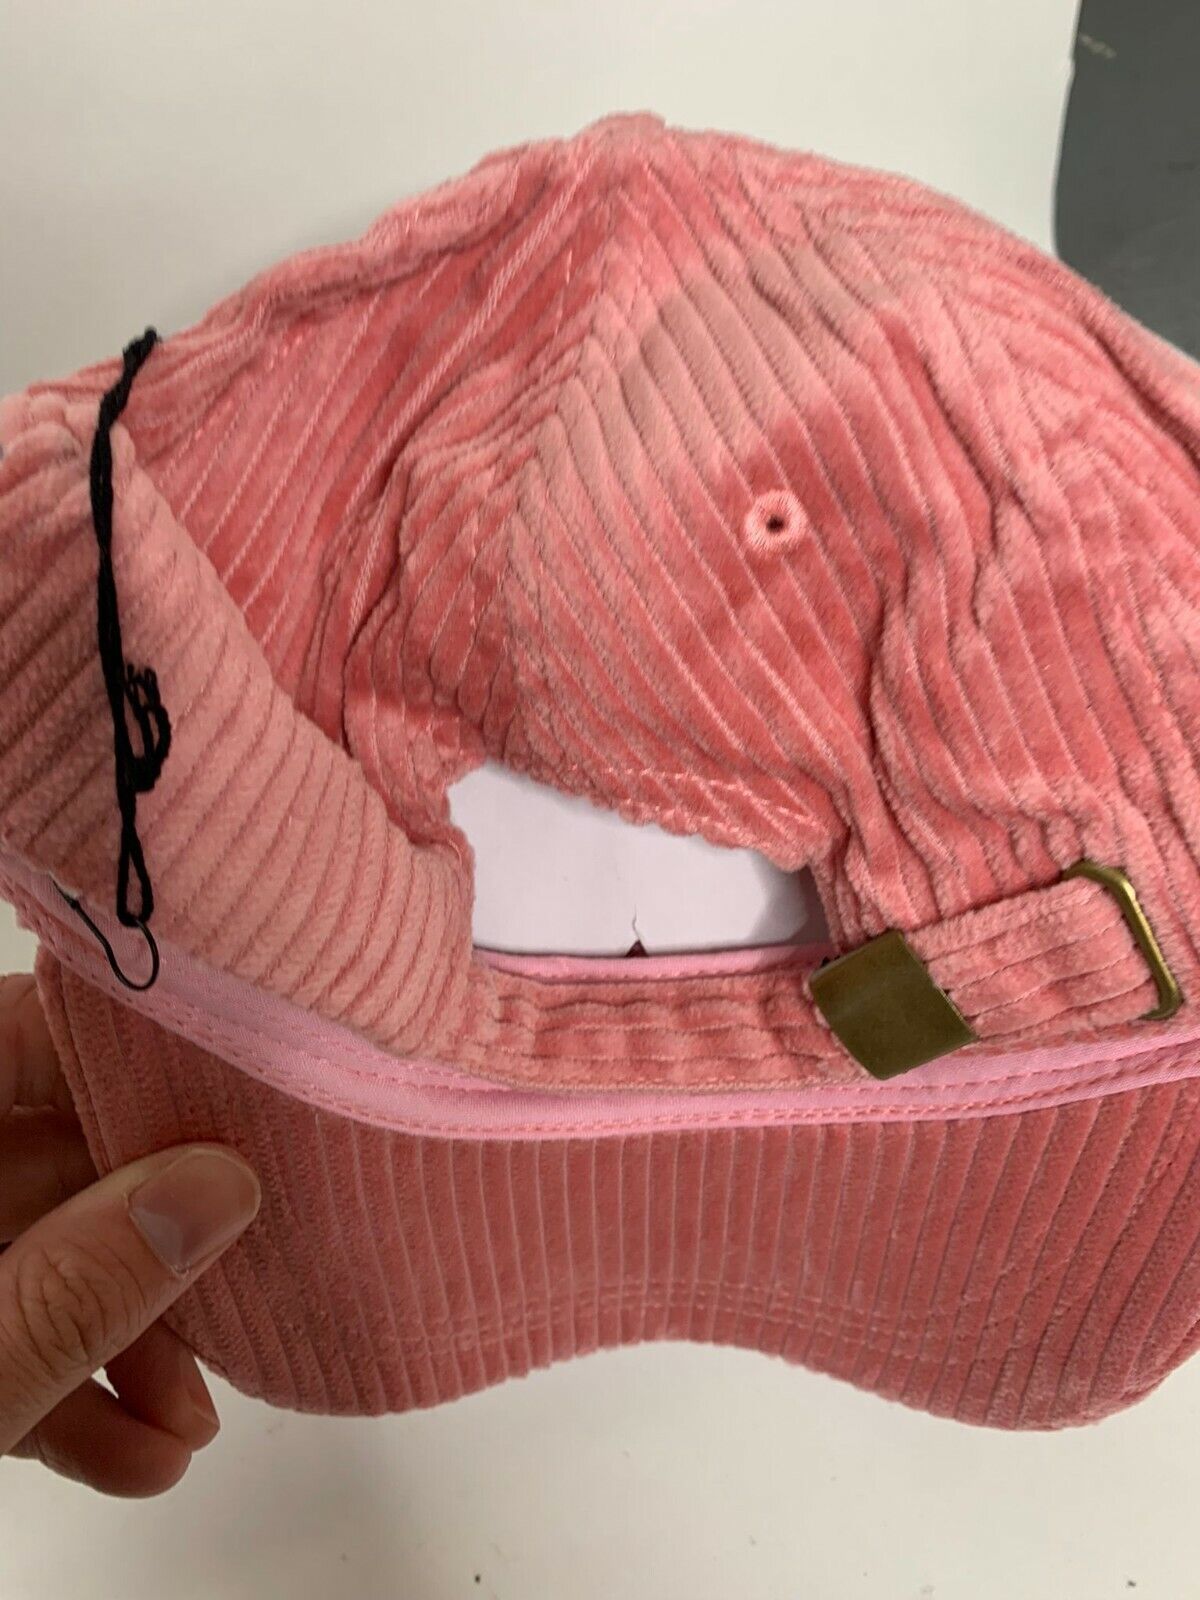 Zyia Active Womens Adjustable Dusty Rose Pink Corduroy Baseball Cap Hat